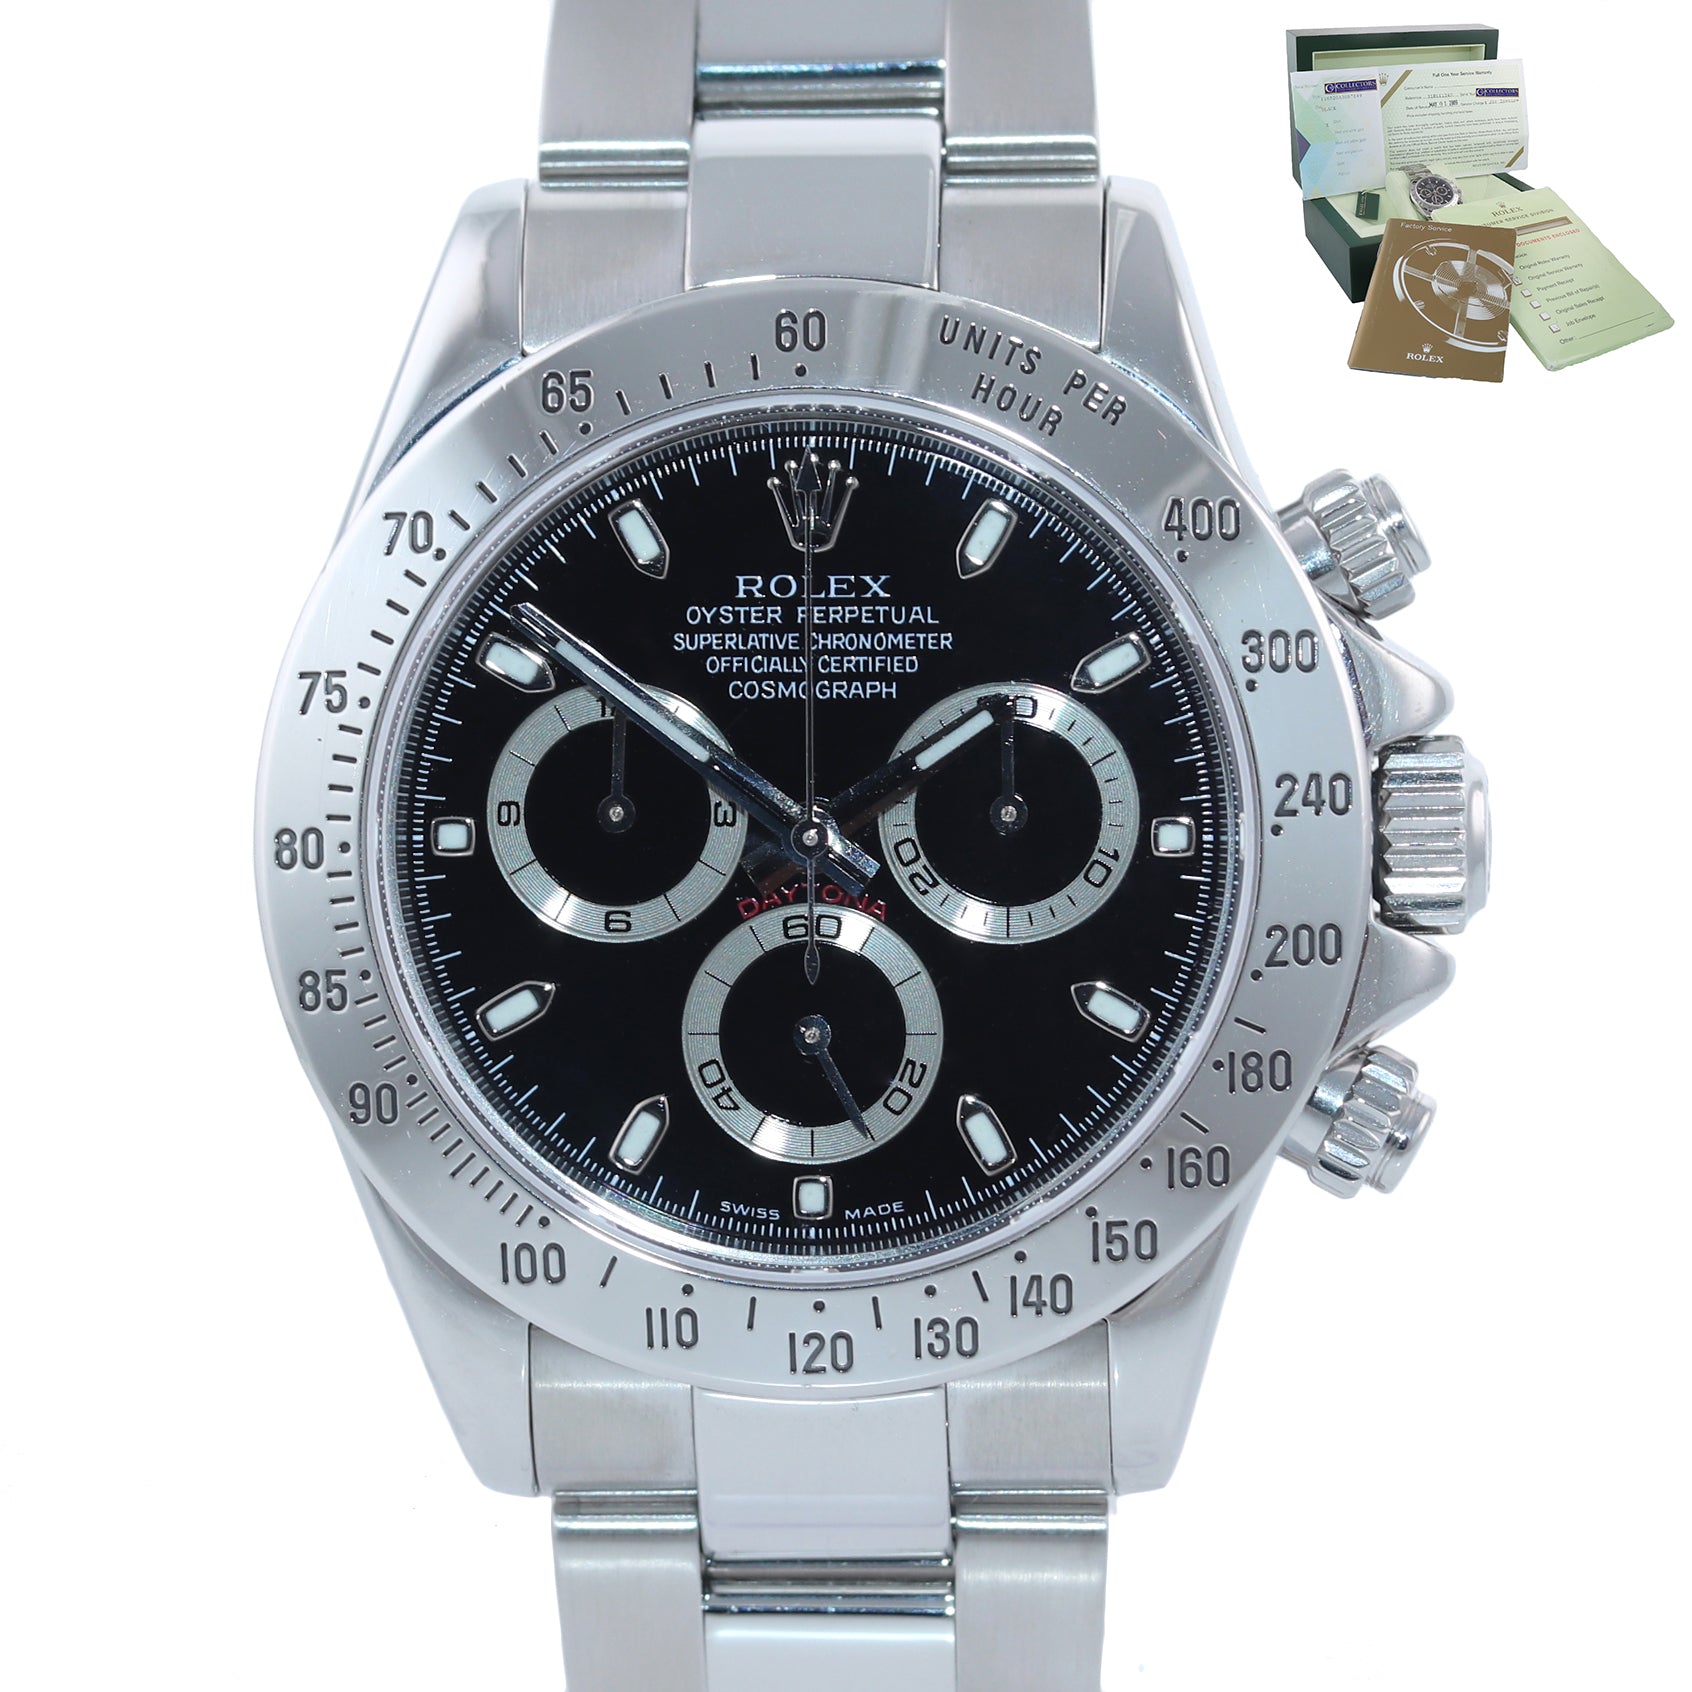 MINT 2005 PAPERS Rolex Daytona 116520 Black Steel Chrono 40mm Watch RSC Service